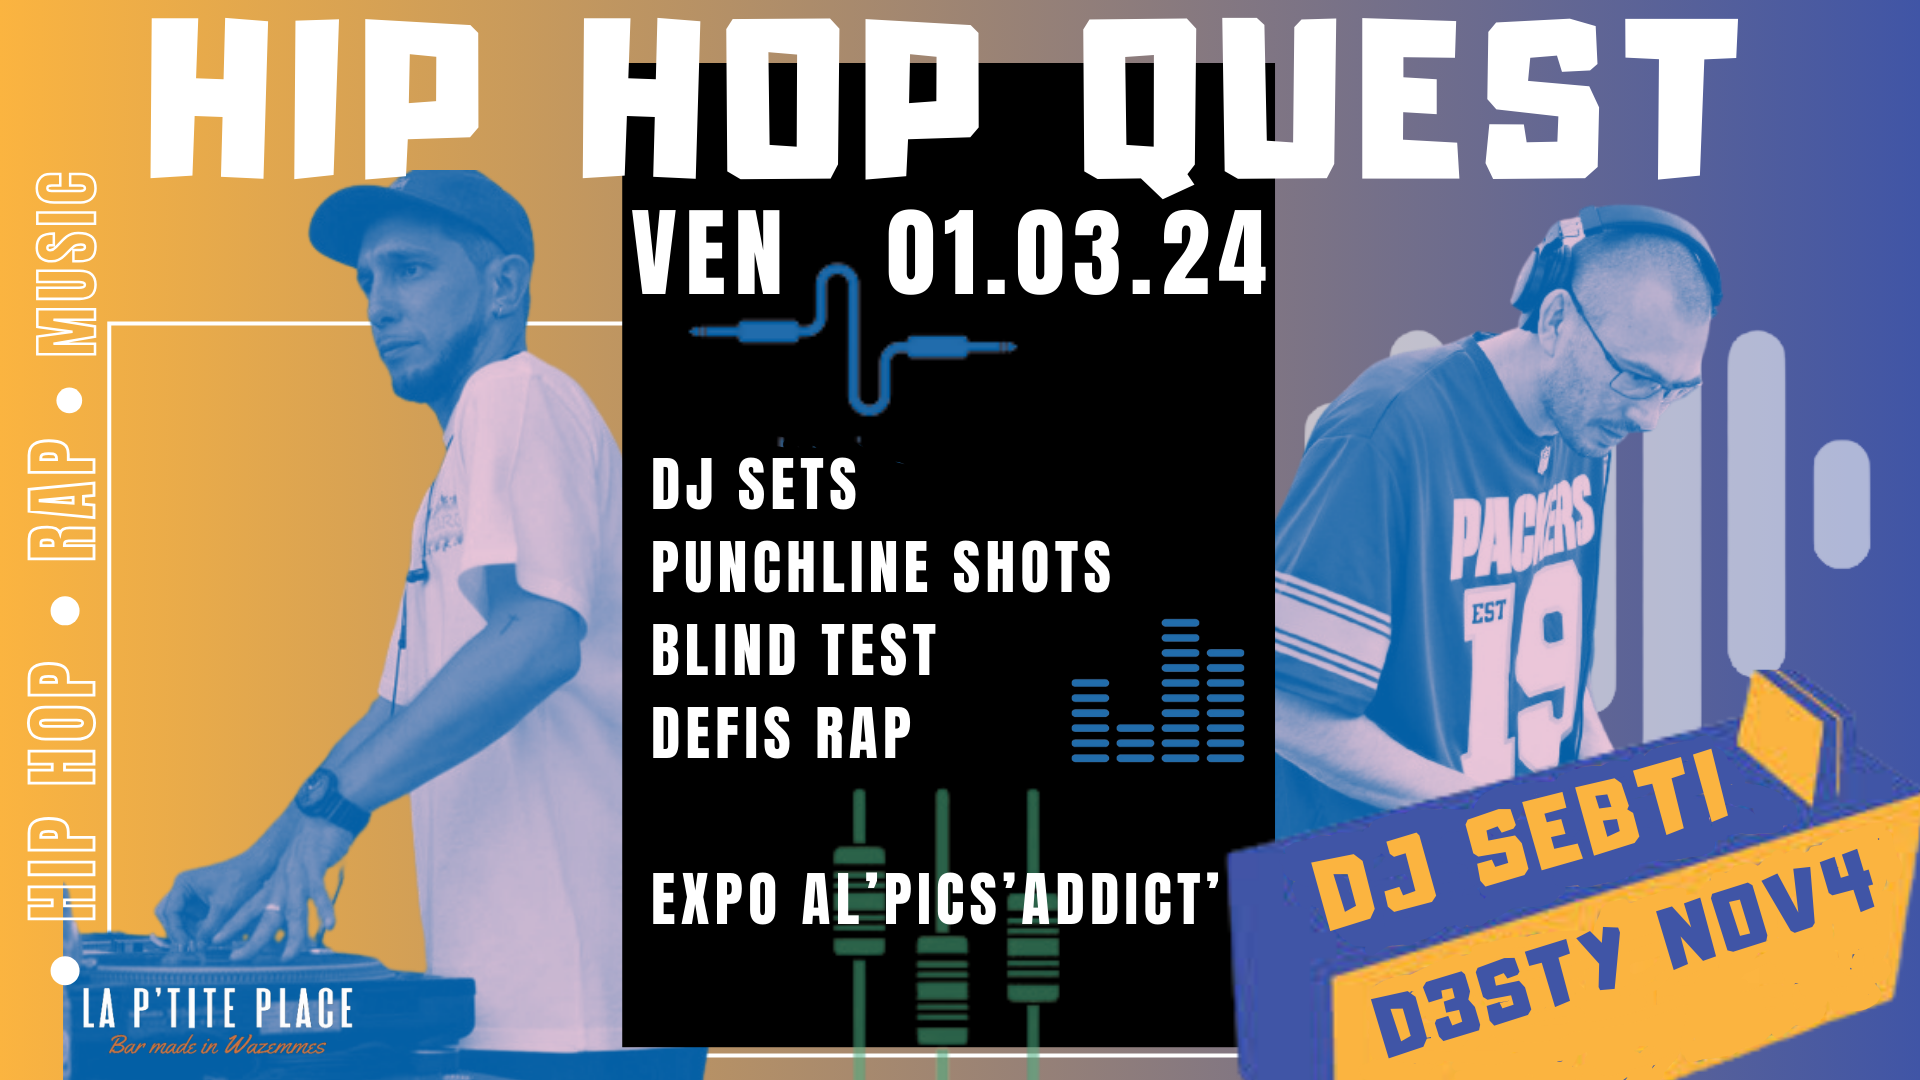 Hip Hop Quest with Sebti et D3sty N0V4